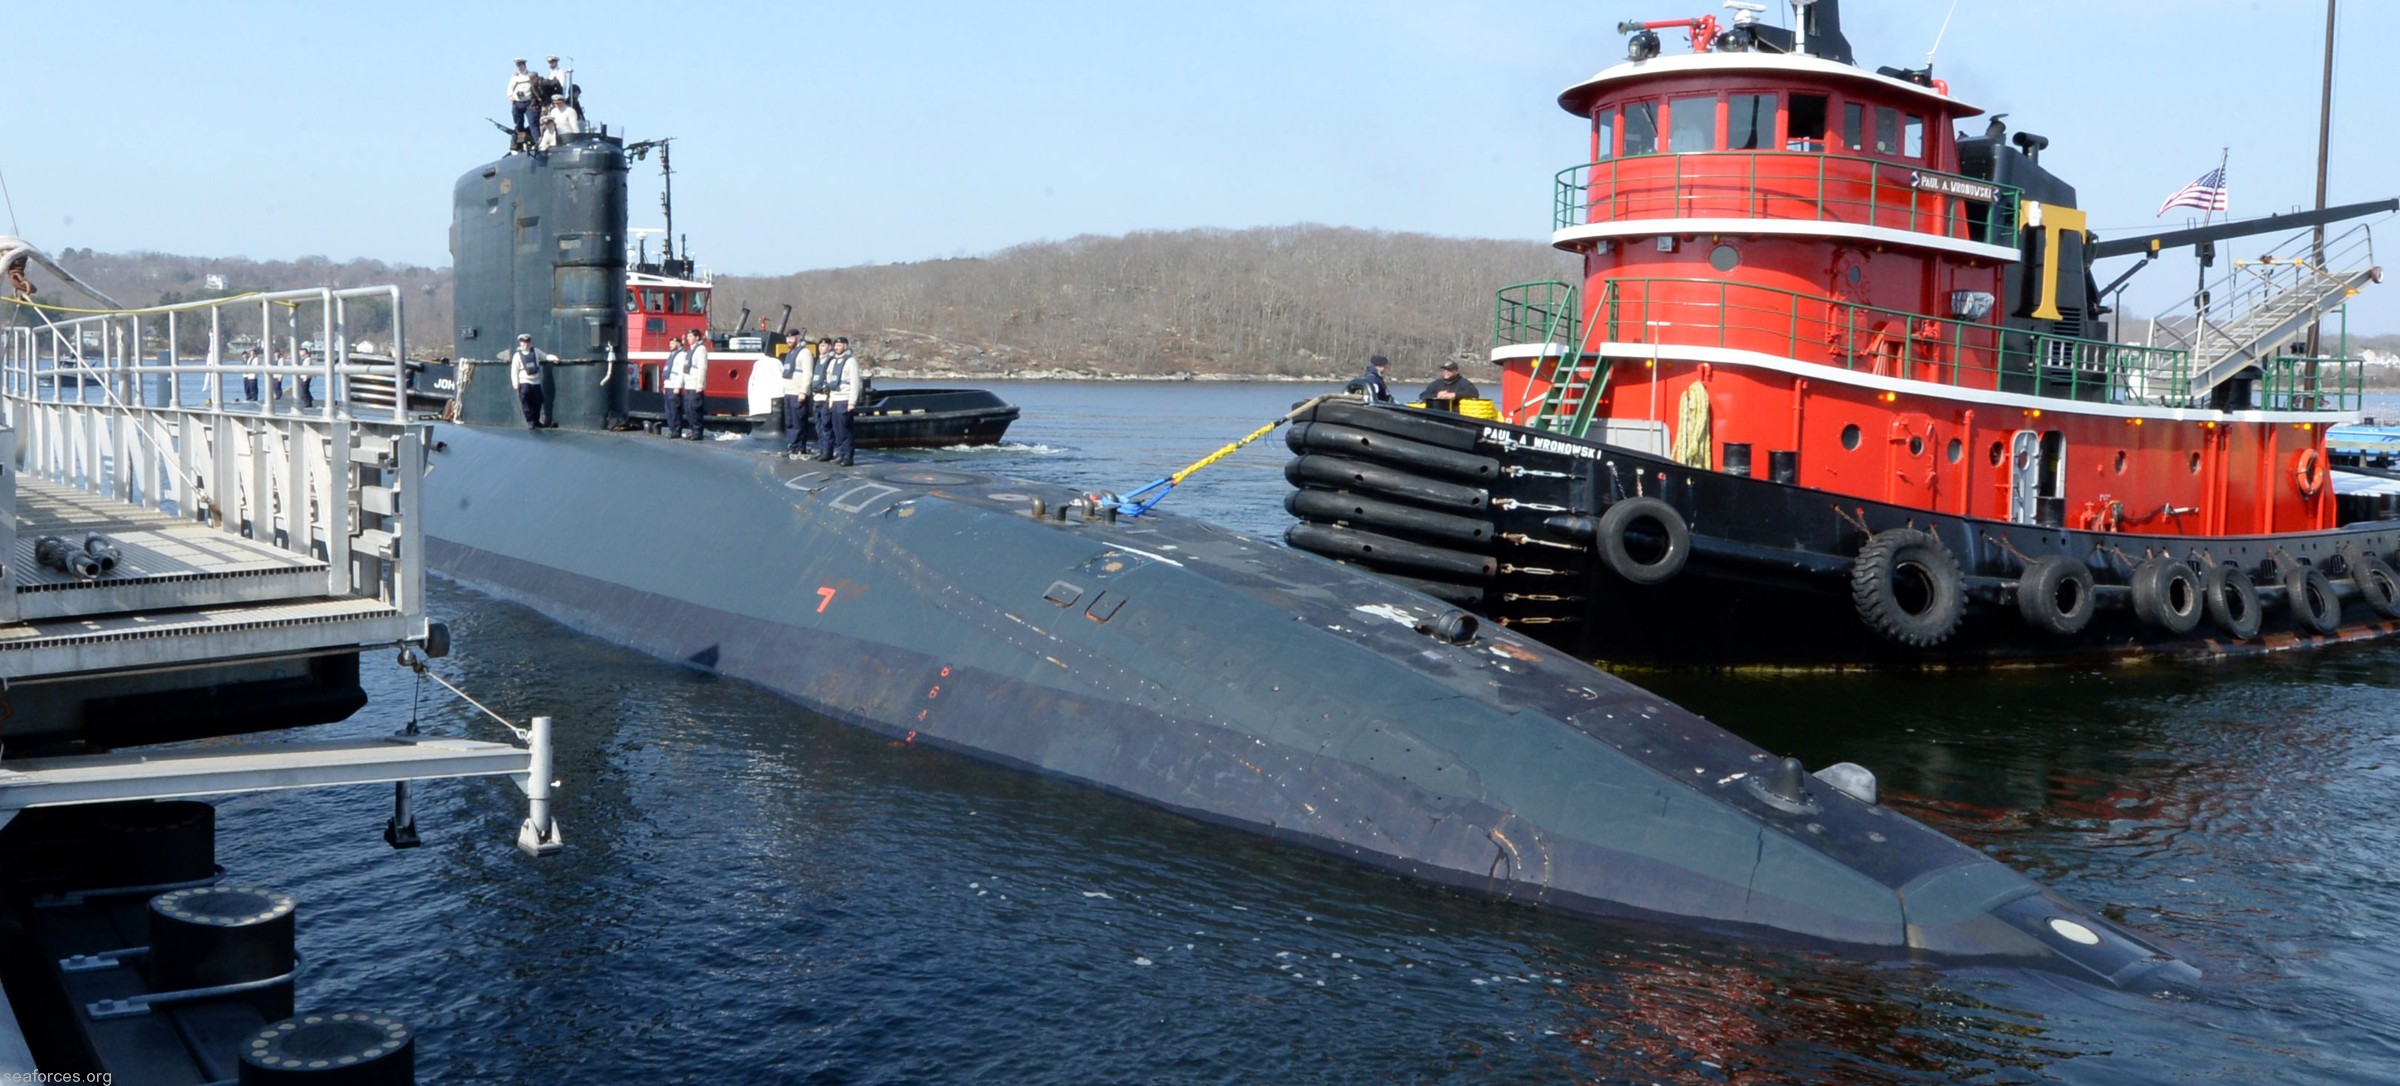 hms trenchant s-91 trafalgar class attack submarine royal navy 10